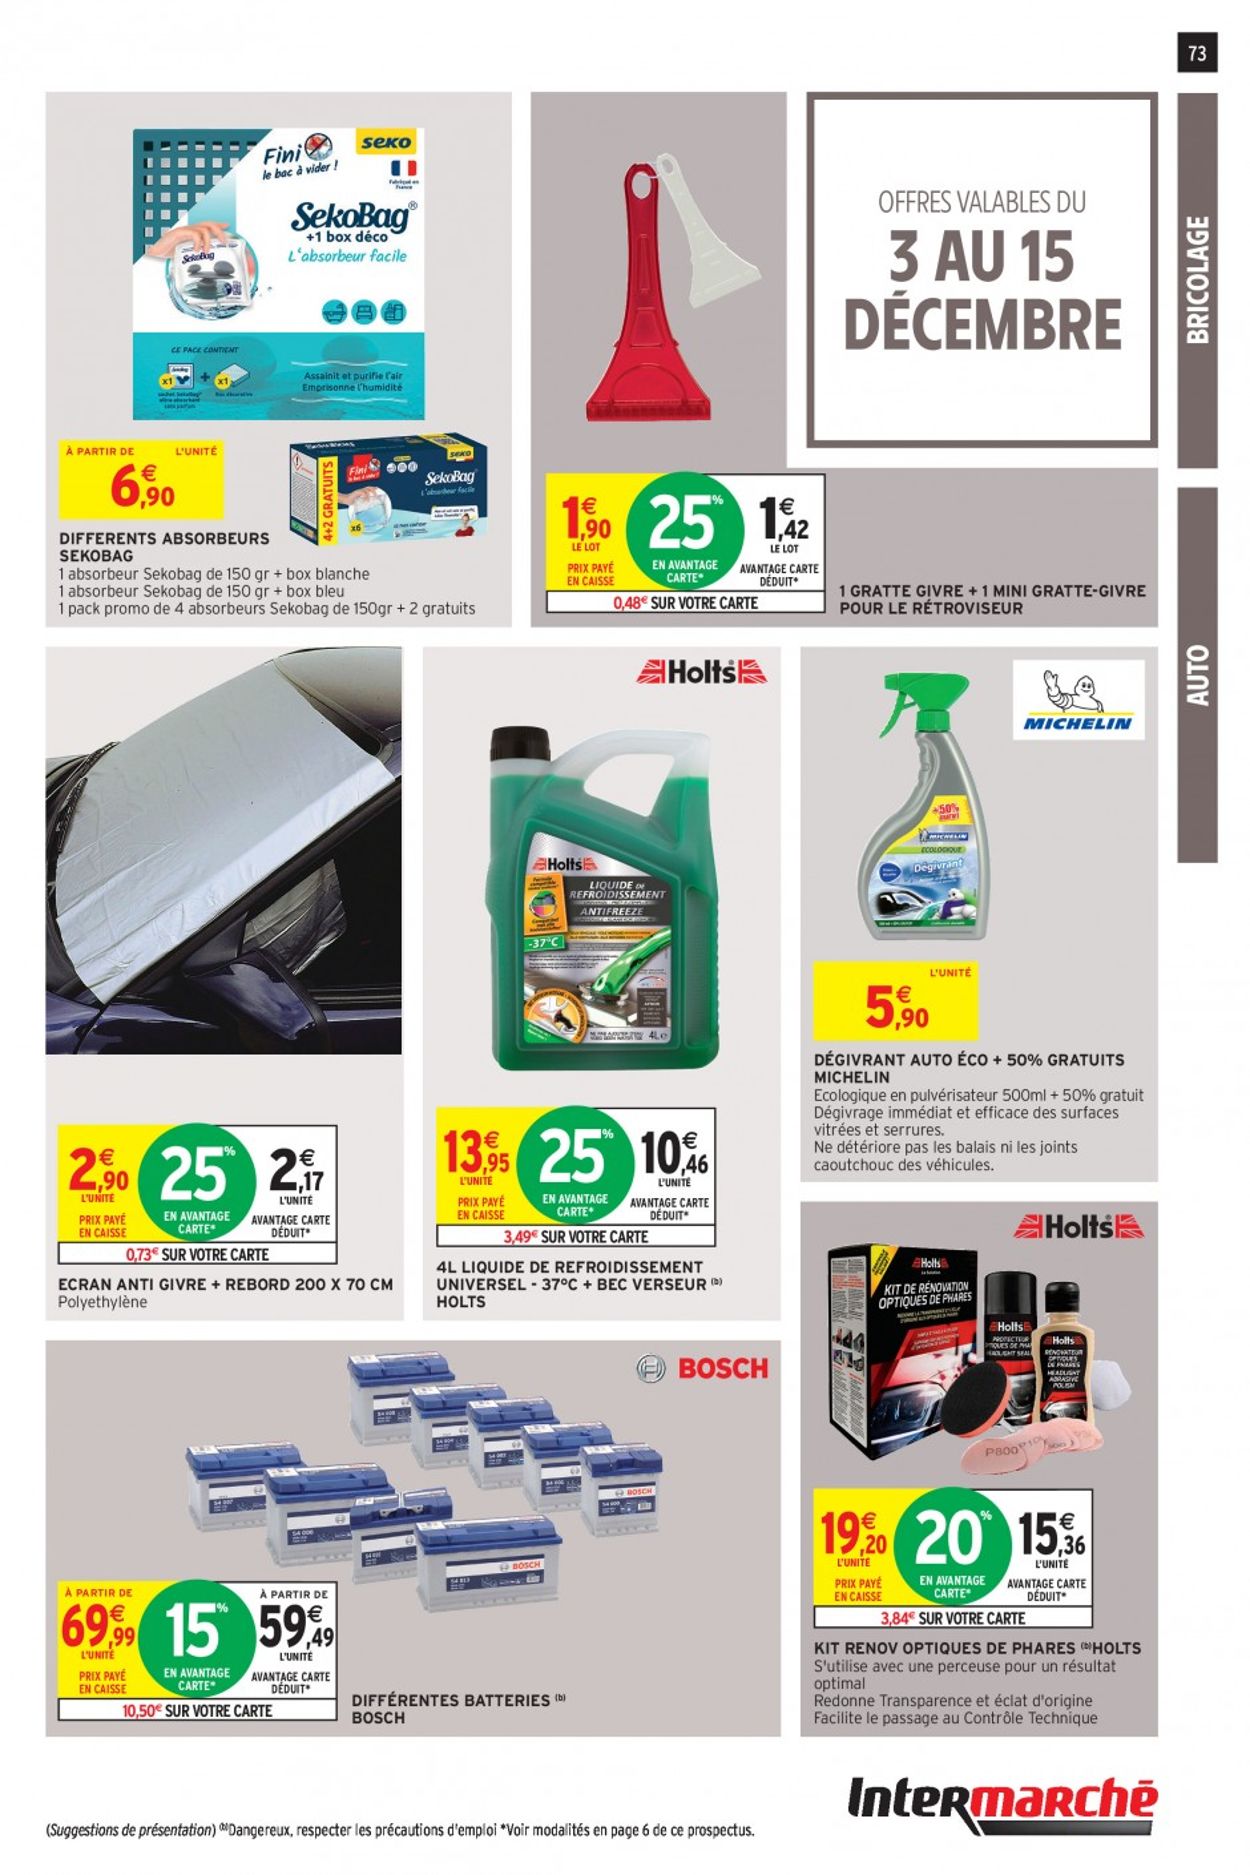 Intermarché Catalogue - 03.12-08.12.2019 (Page 71)